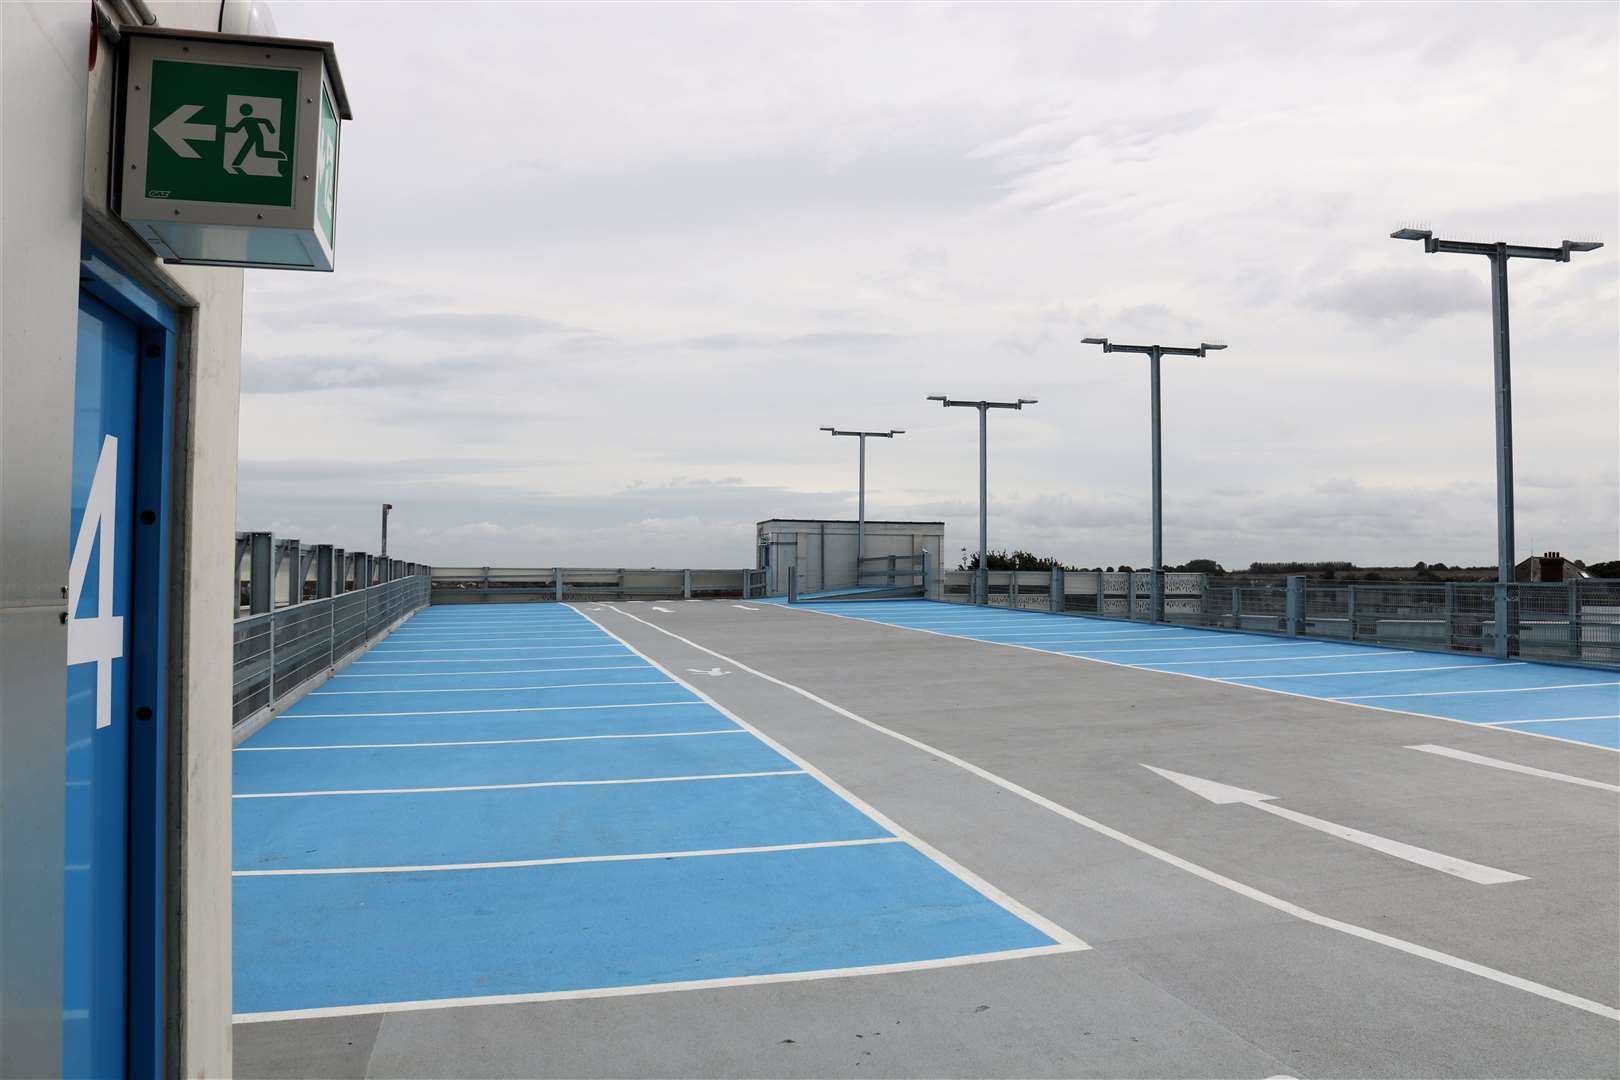 Sittingbourne's new multi-storey car park is now open